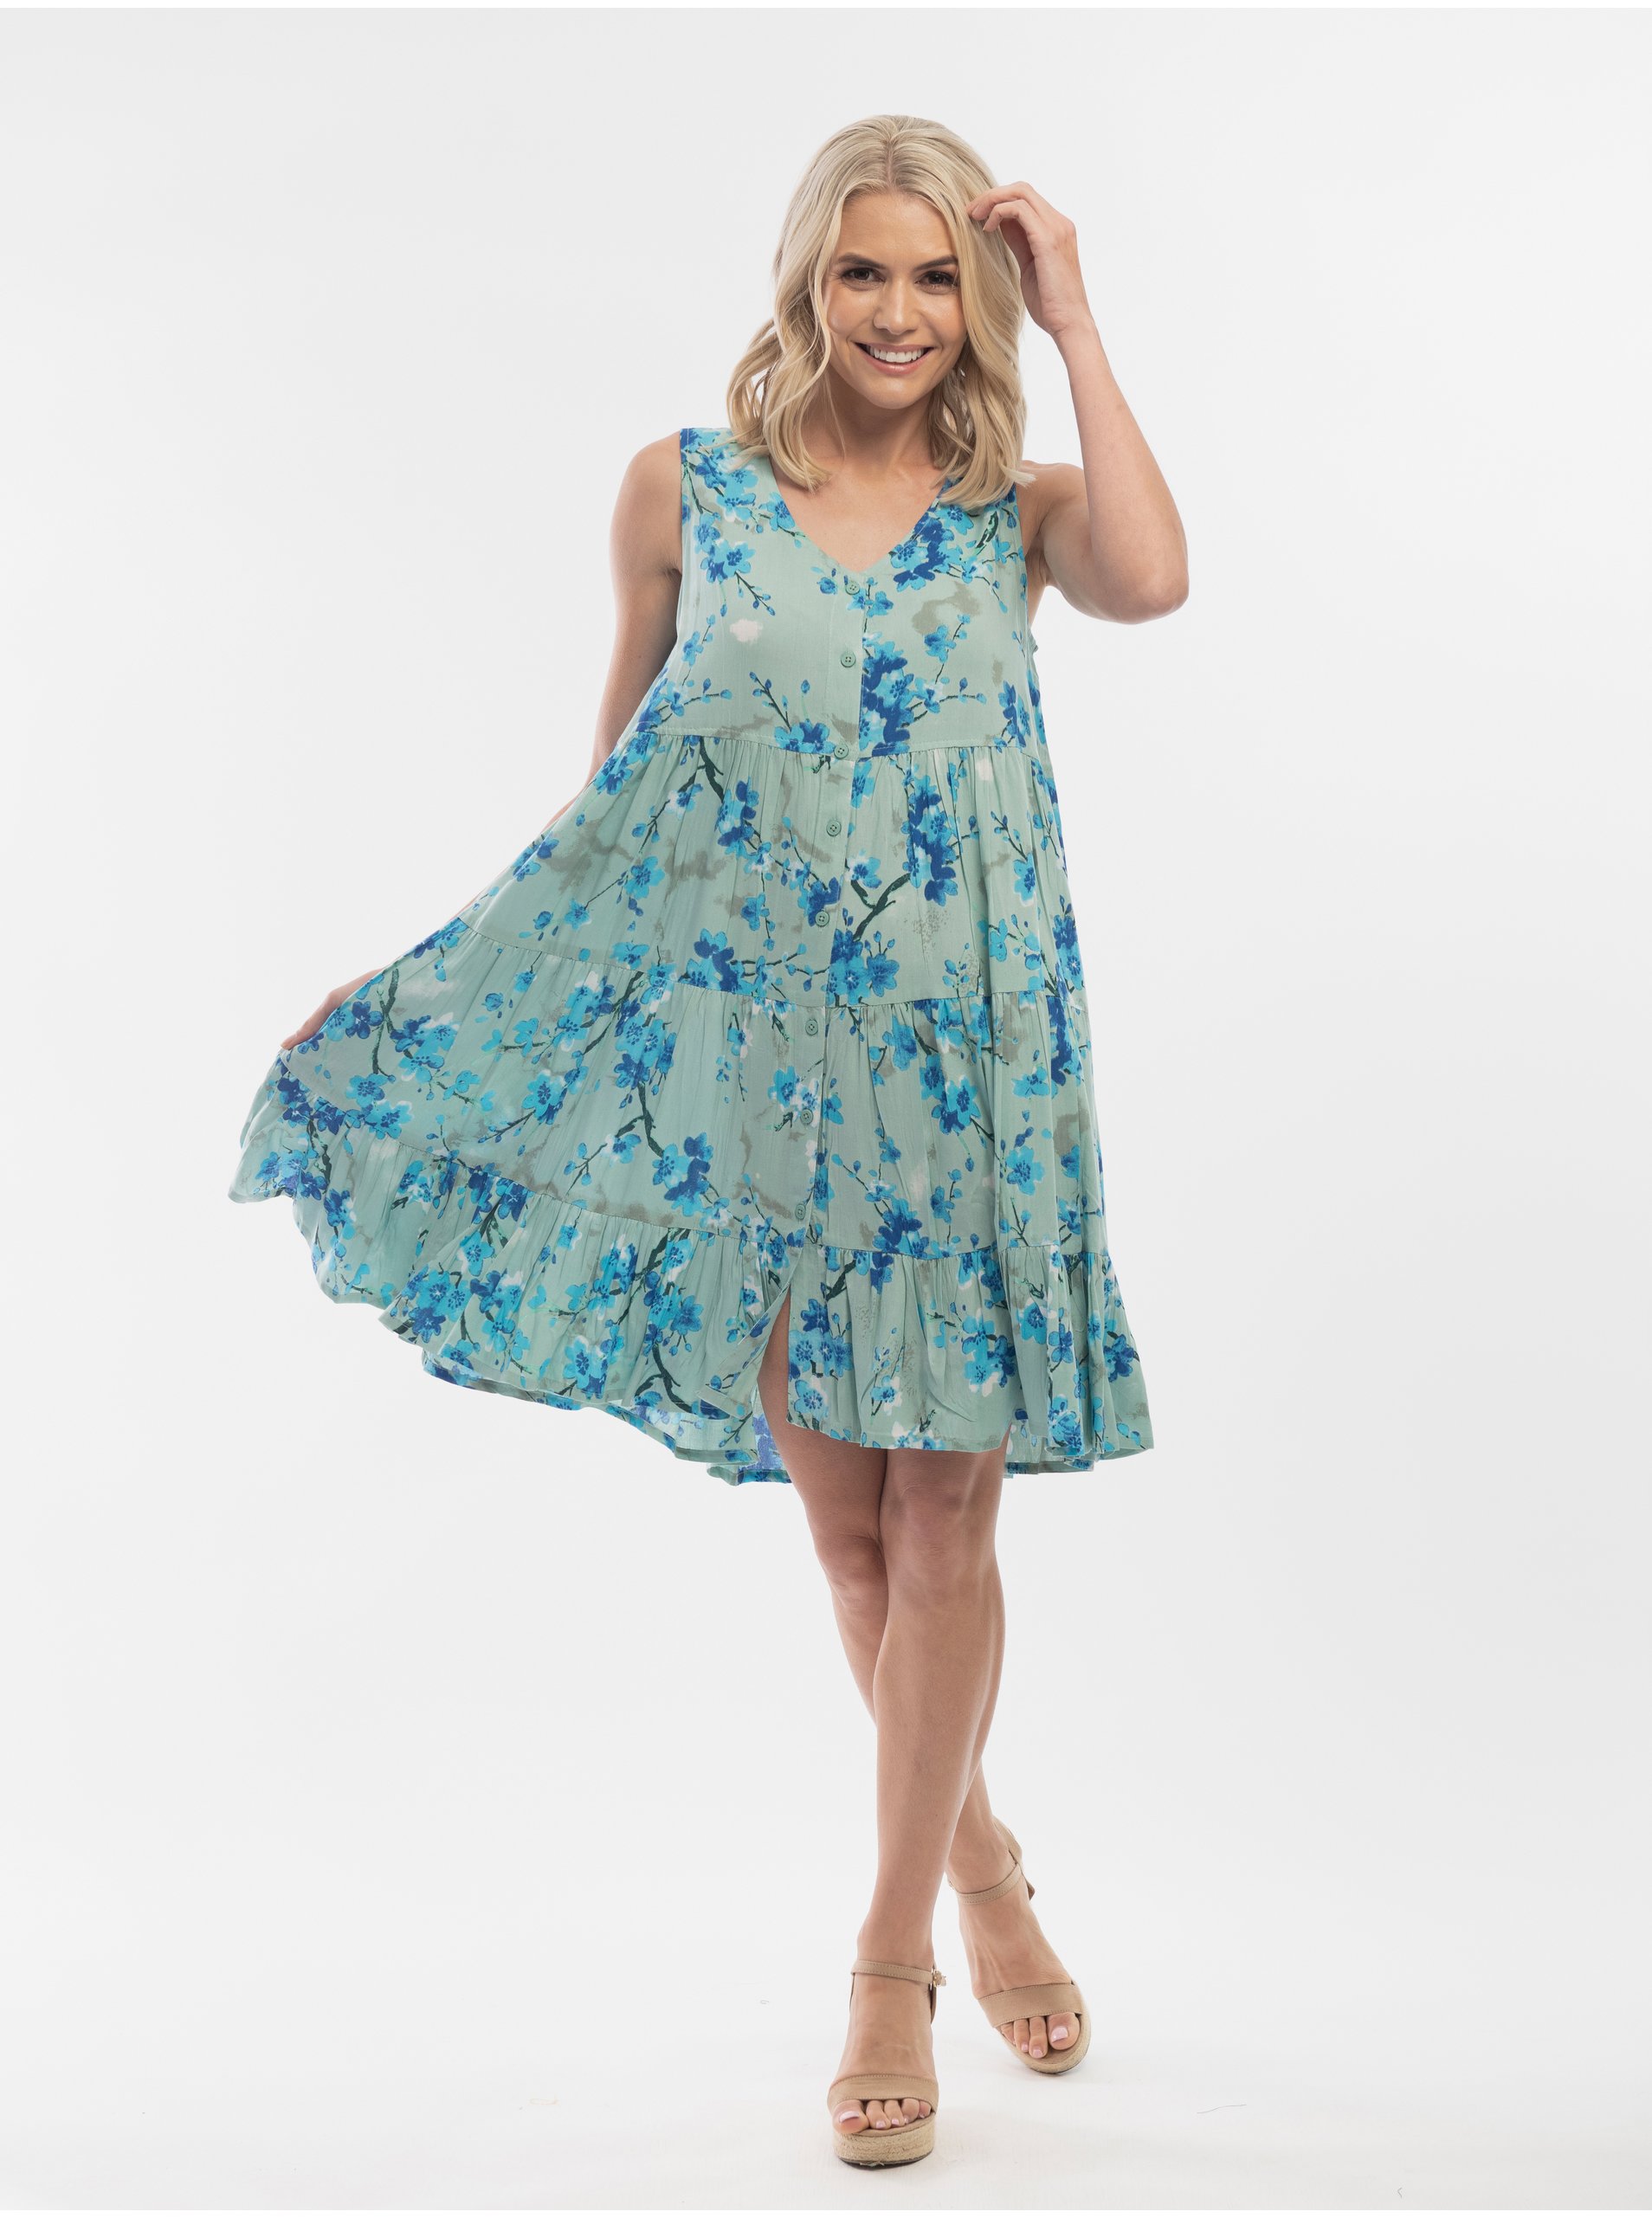 Lacno Letné a plážové šaty pre ženy Orientique - tyrkysová, modrá